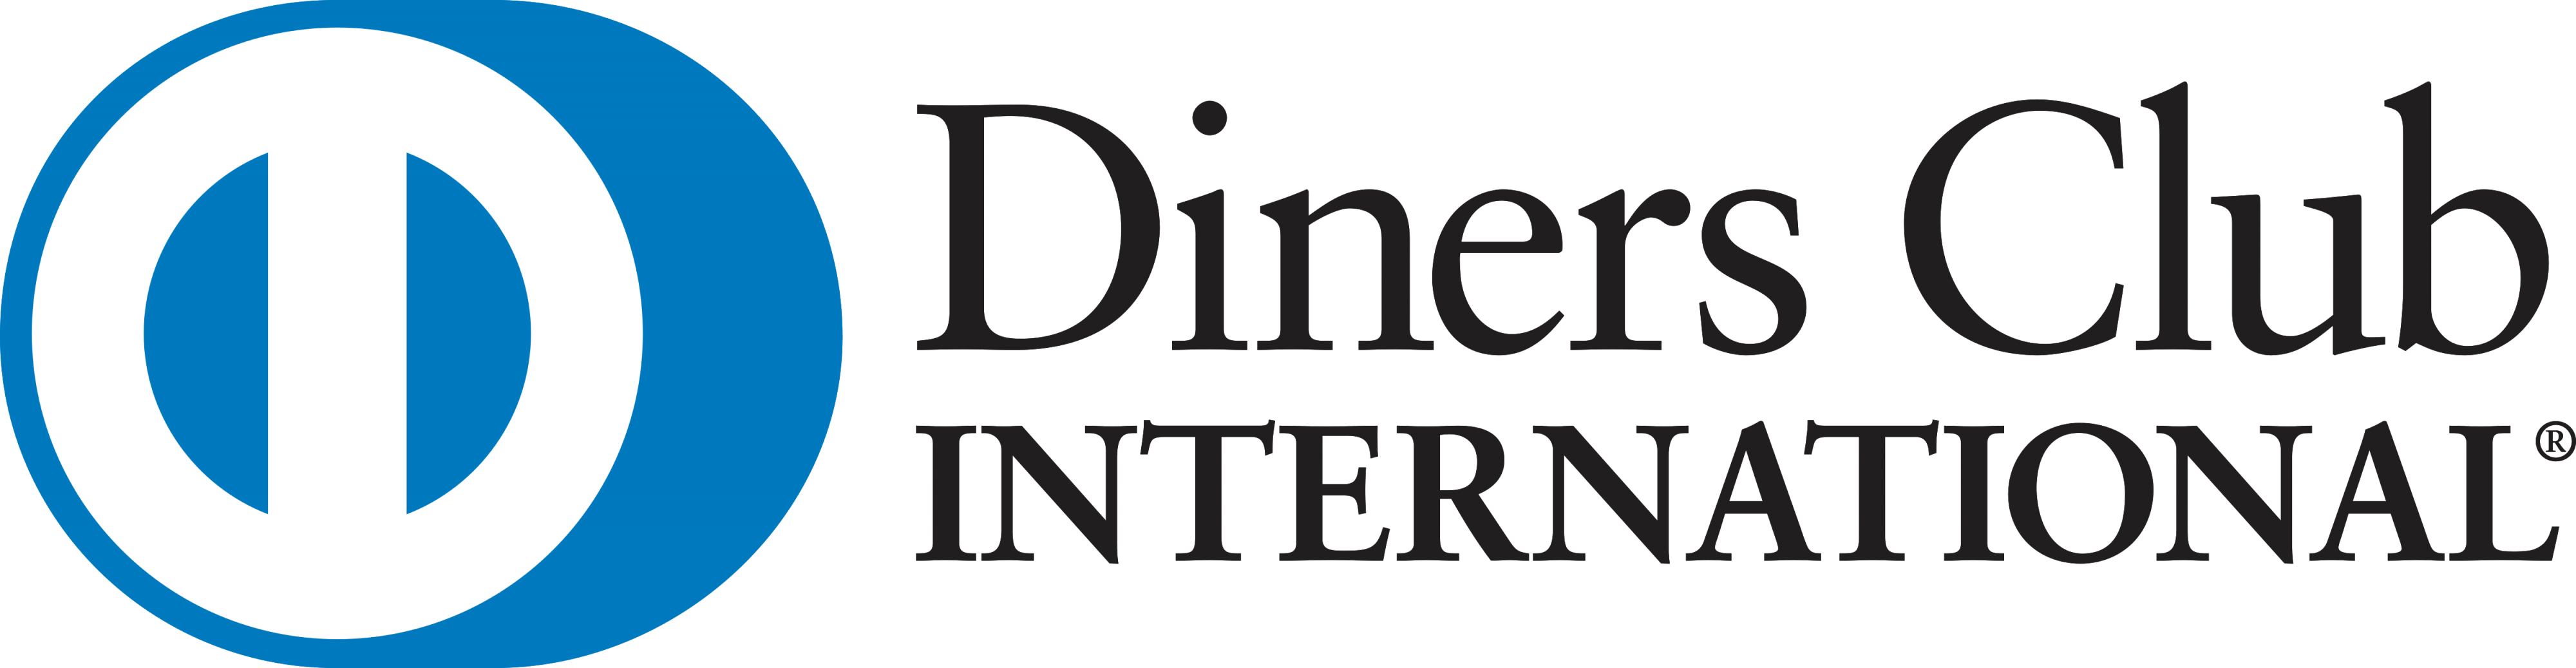 Diners Club logo.